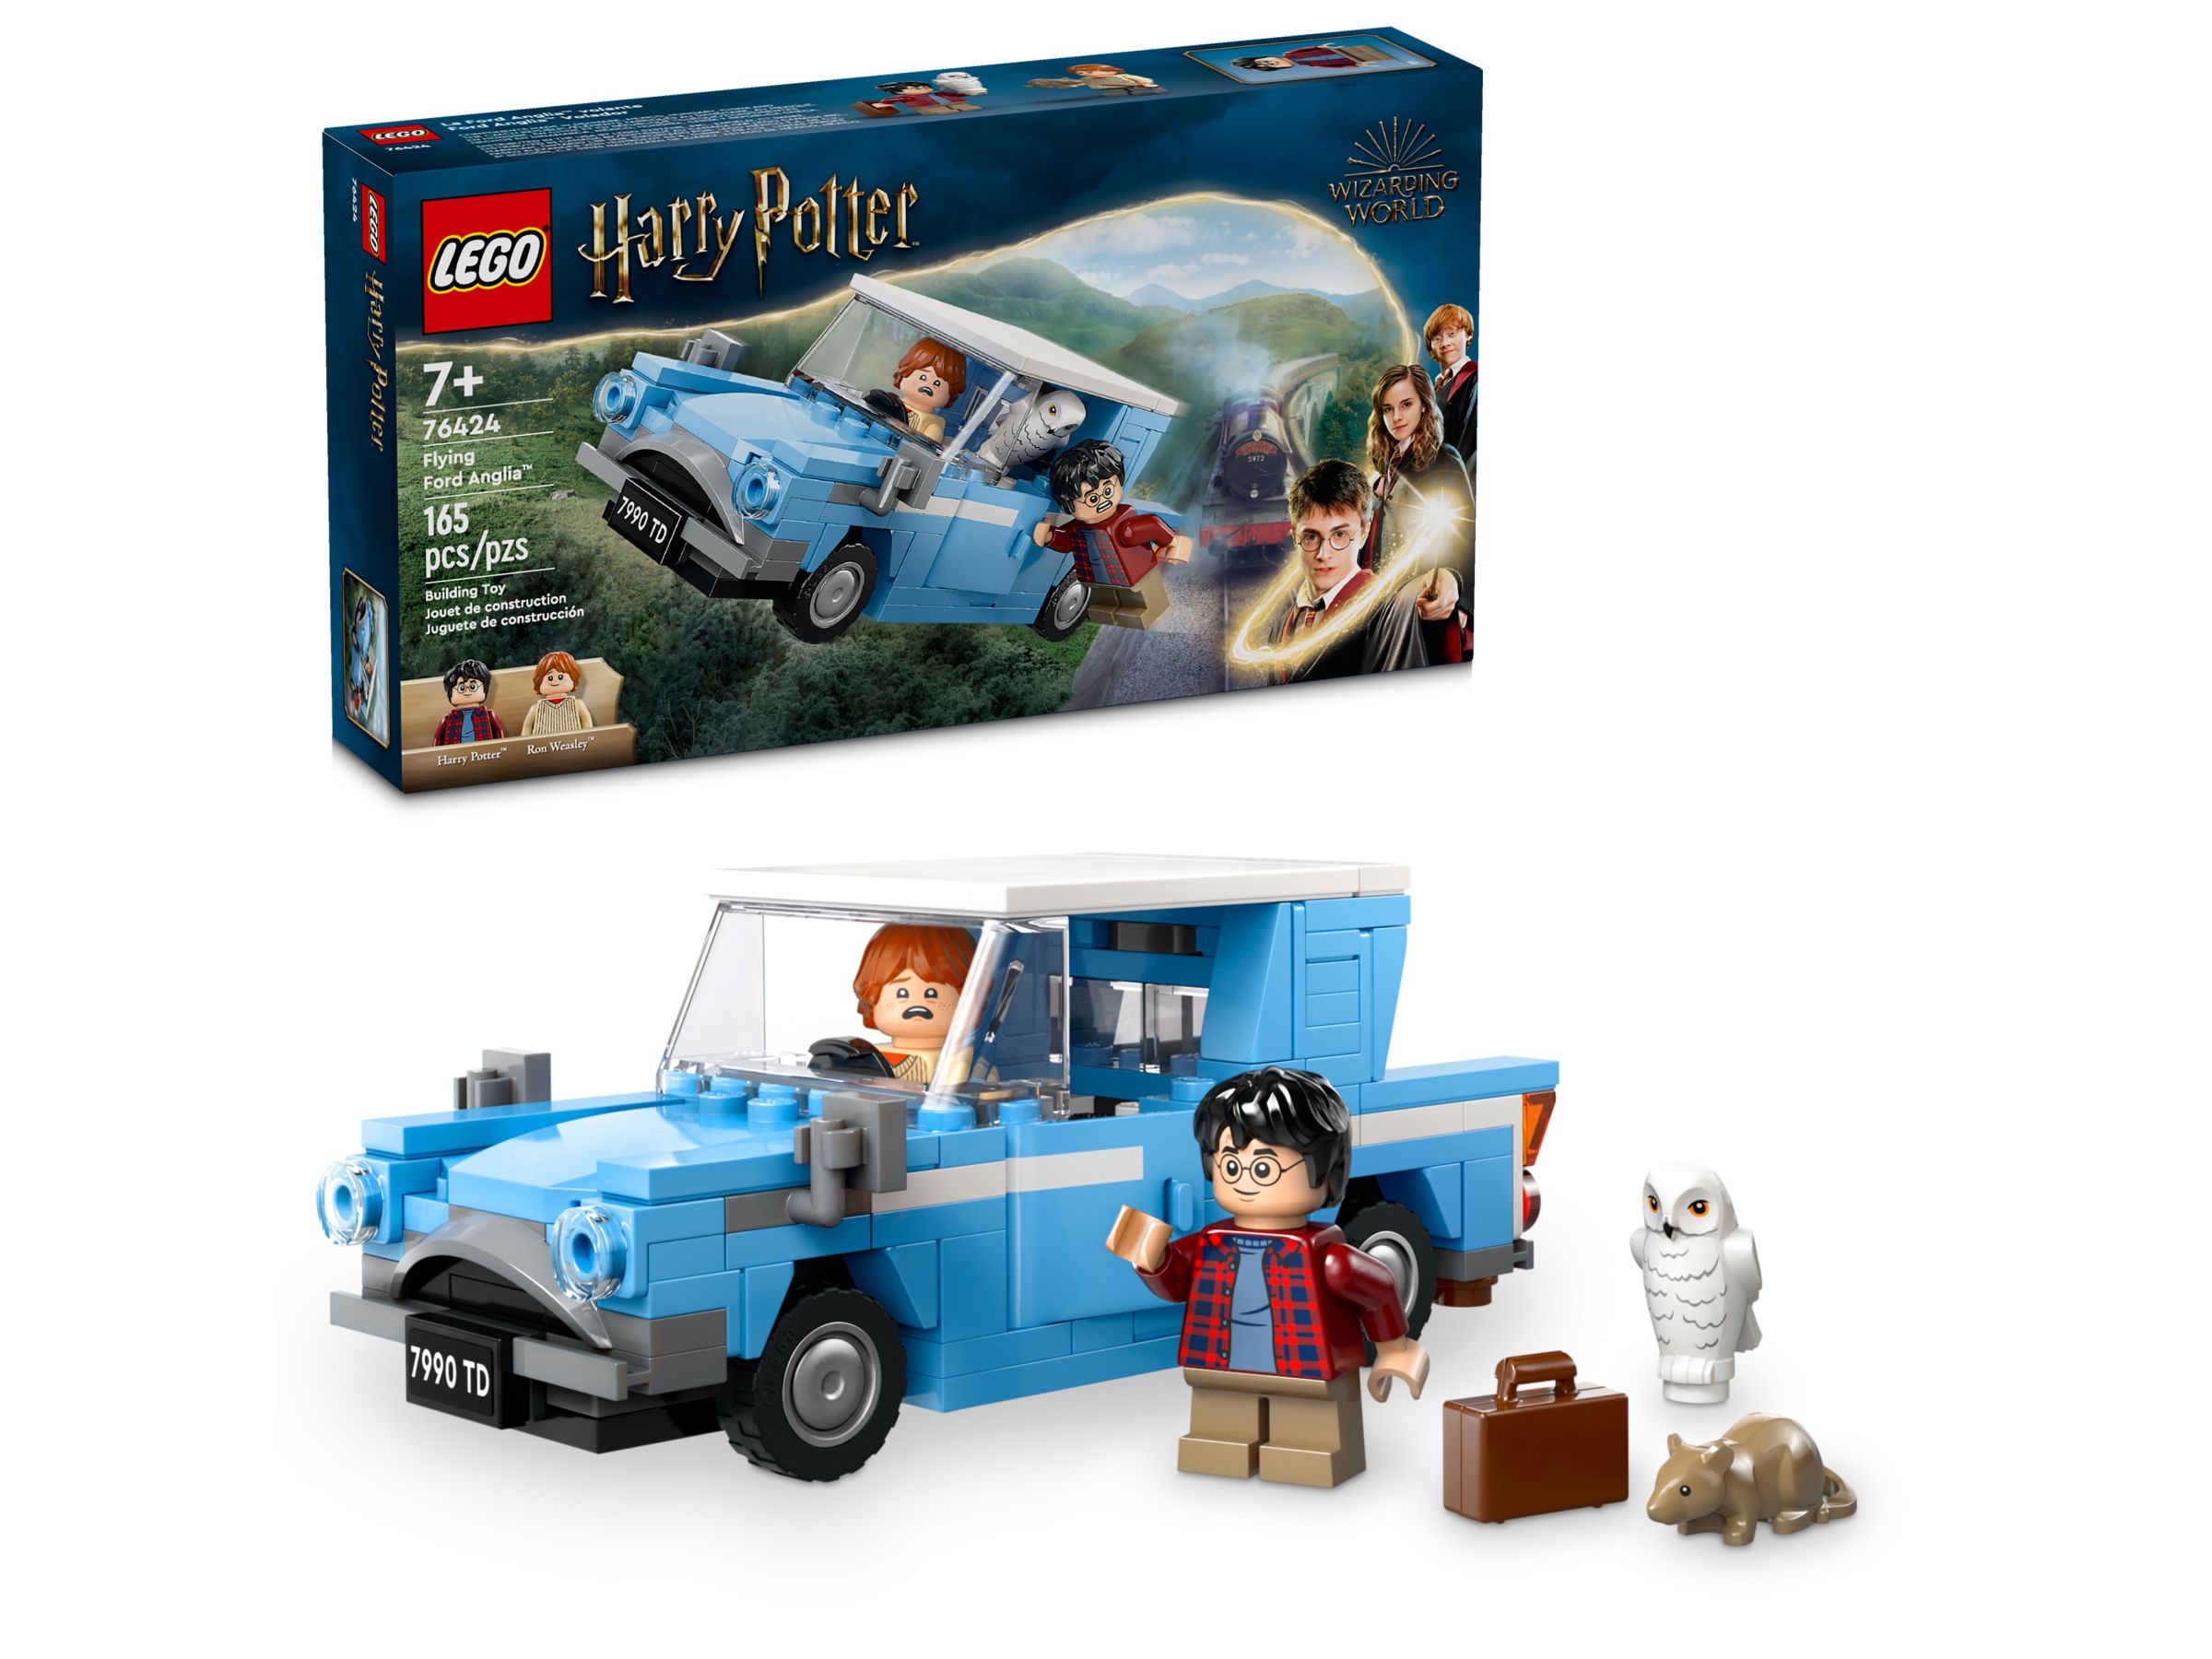 LEGO Harry Potter 76424 Fliegender Ford Anglia™ LEGO_76424_boxprod_v39.jpg